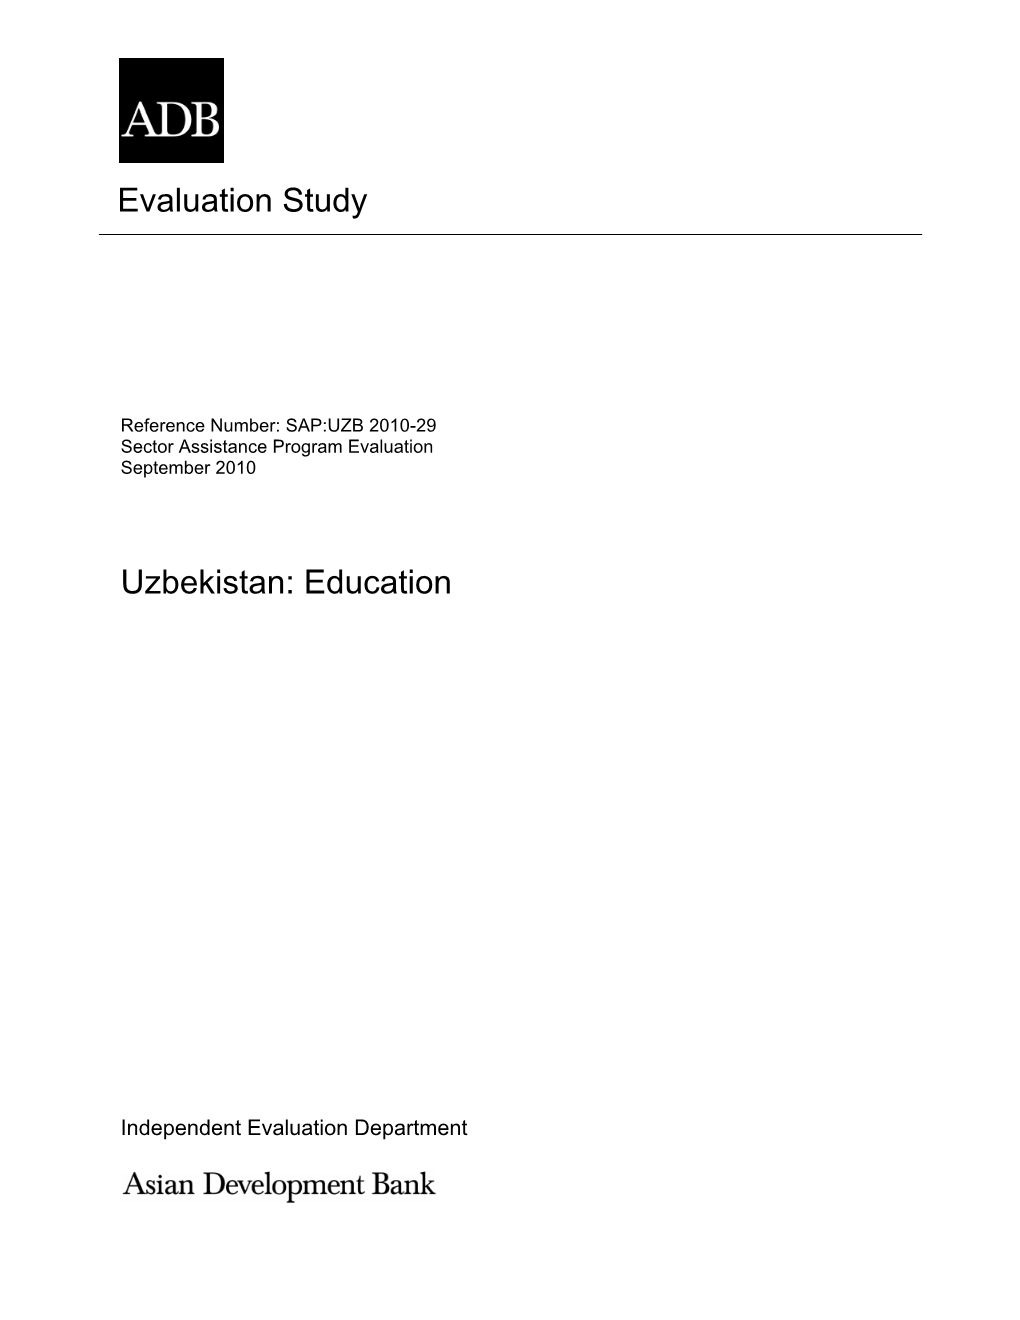 Sector Assistance Program Evaluation on Education in Uzbekistan